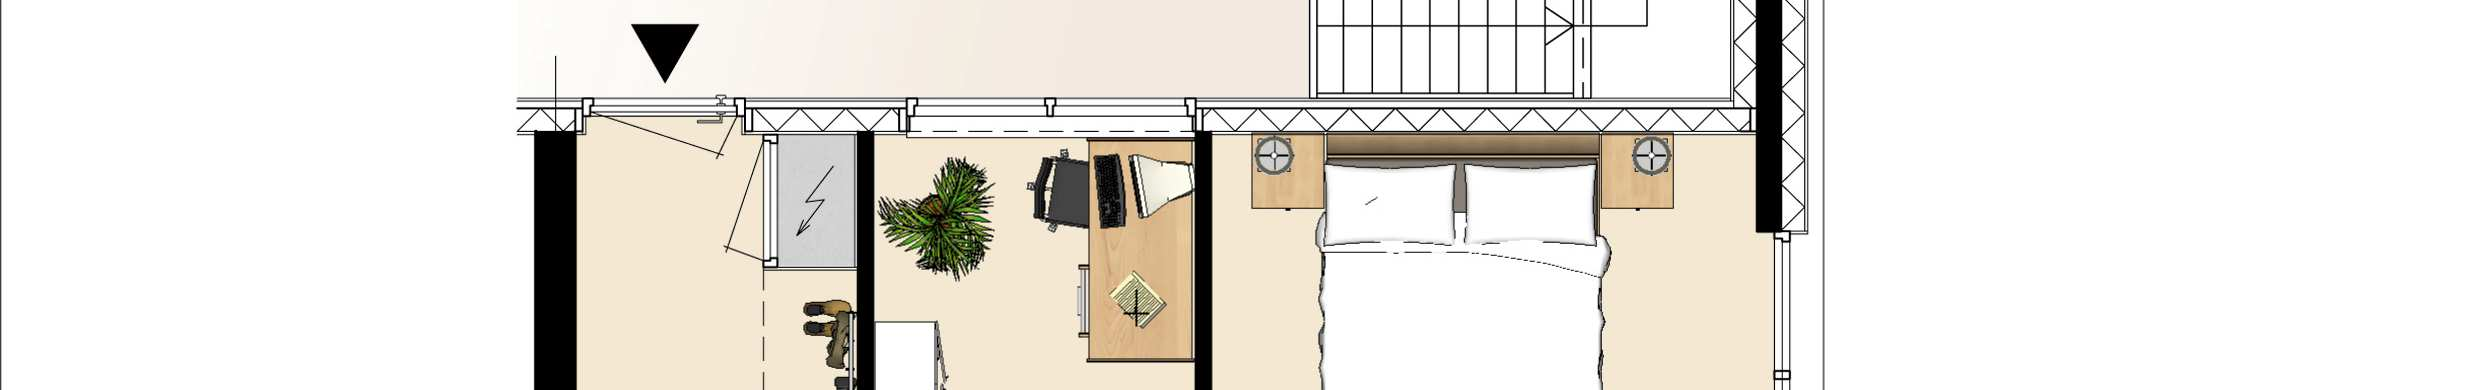 Tekening met interieur optie 2: slaapkamer